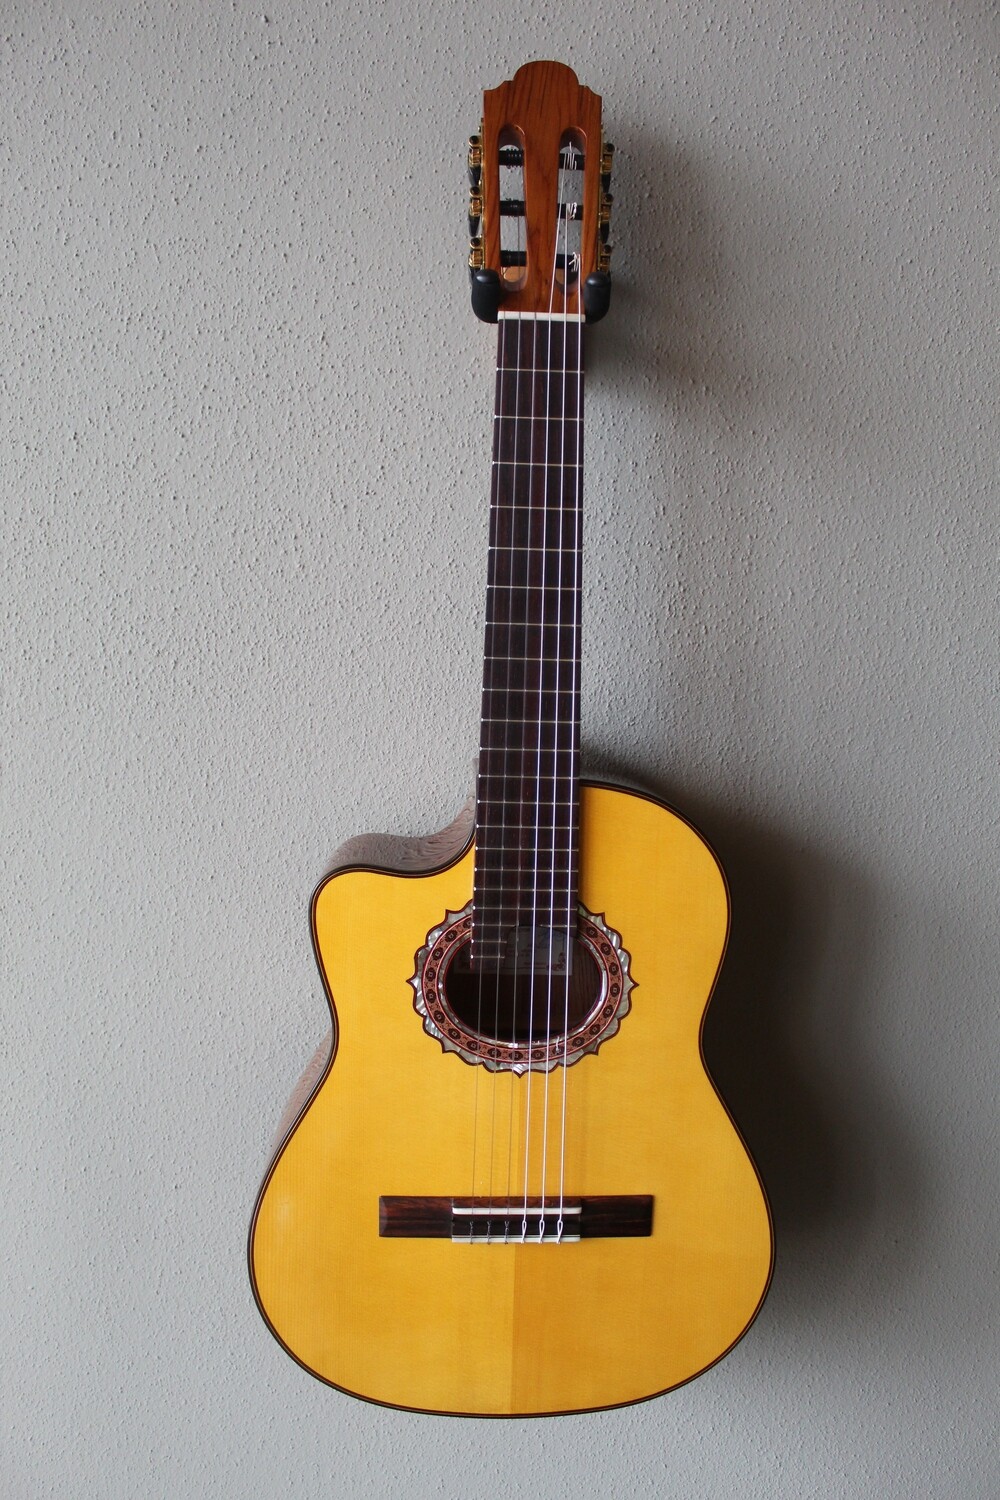 Marlon (Francisco) Navarro Left Handed Acoustic/Electric Requinto Guitar with Cutaway